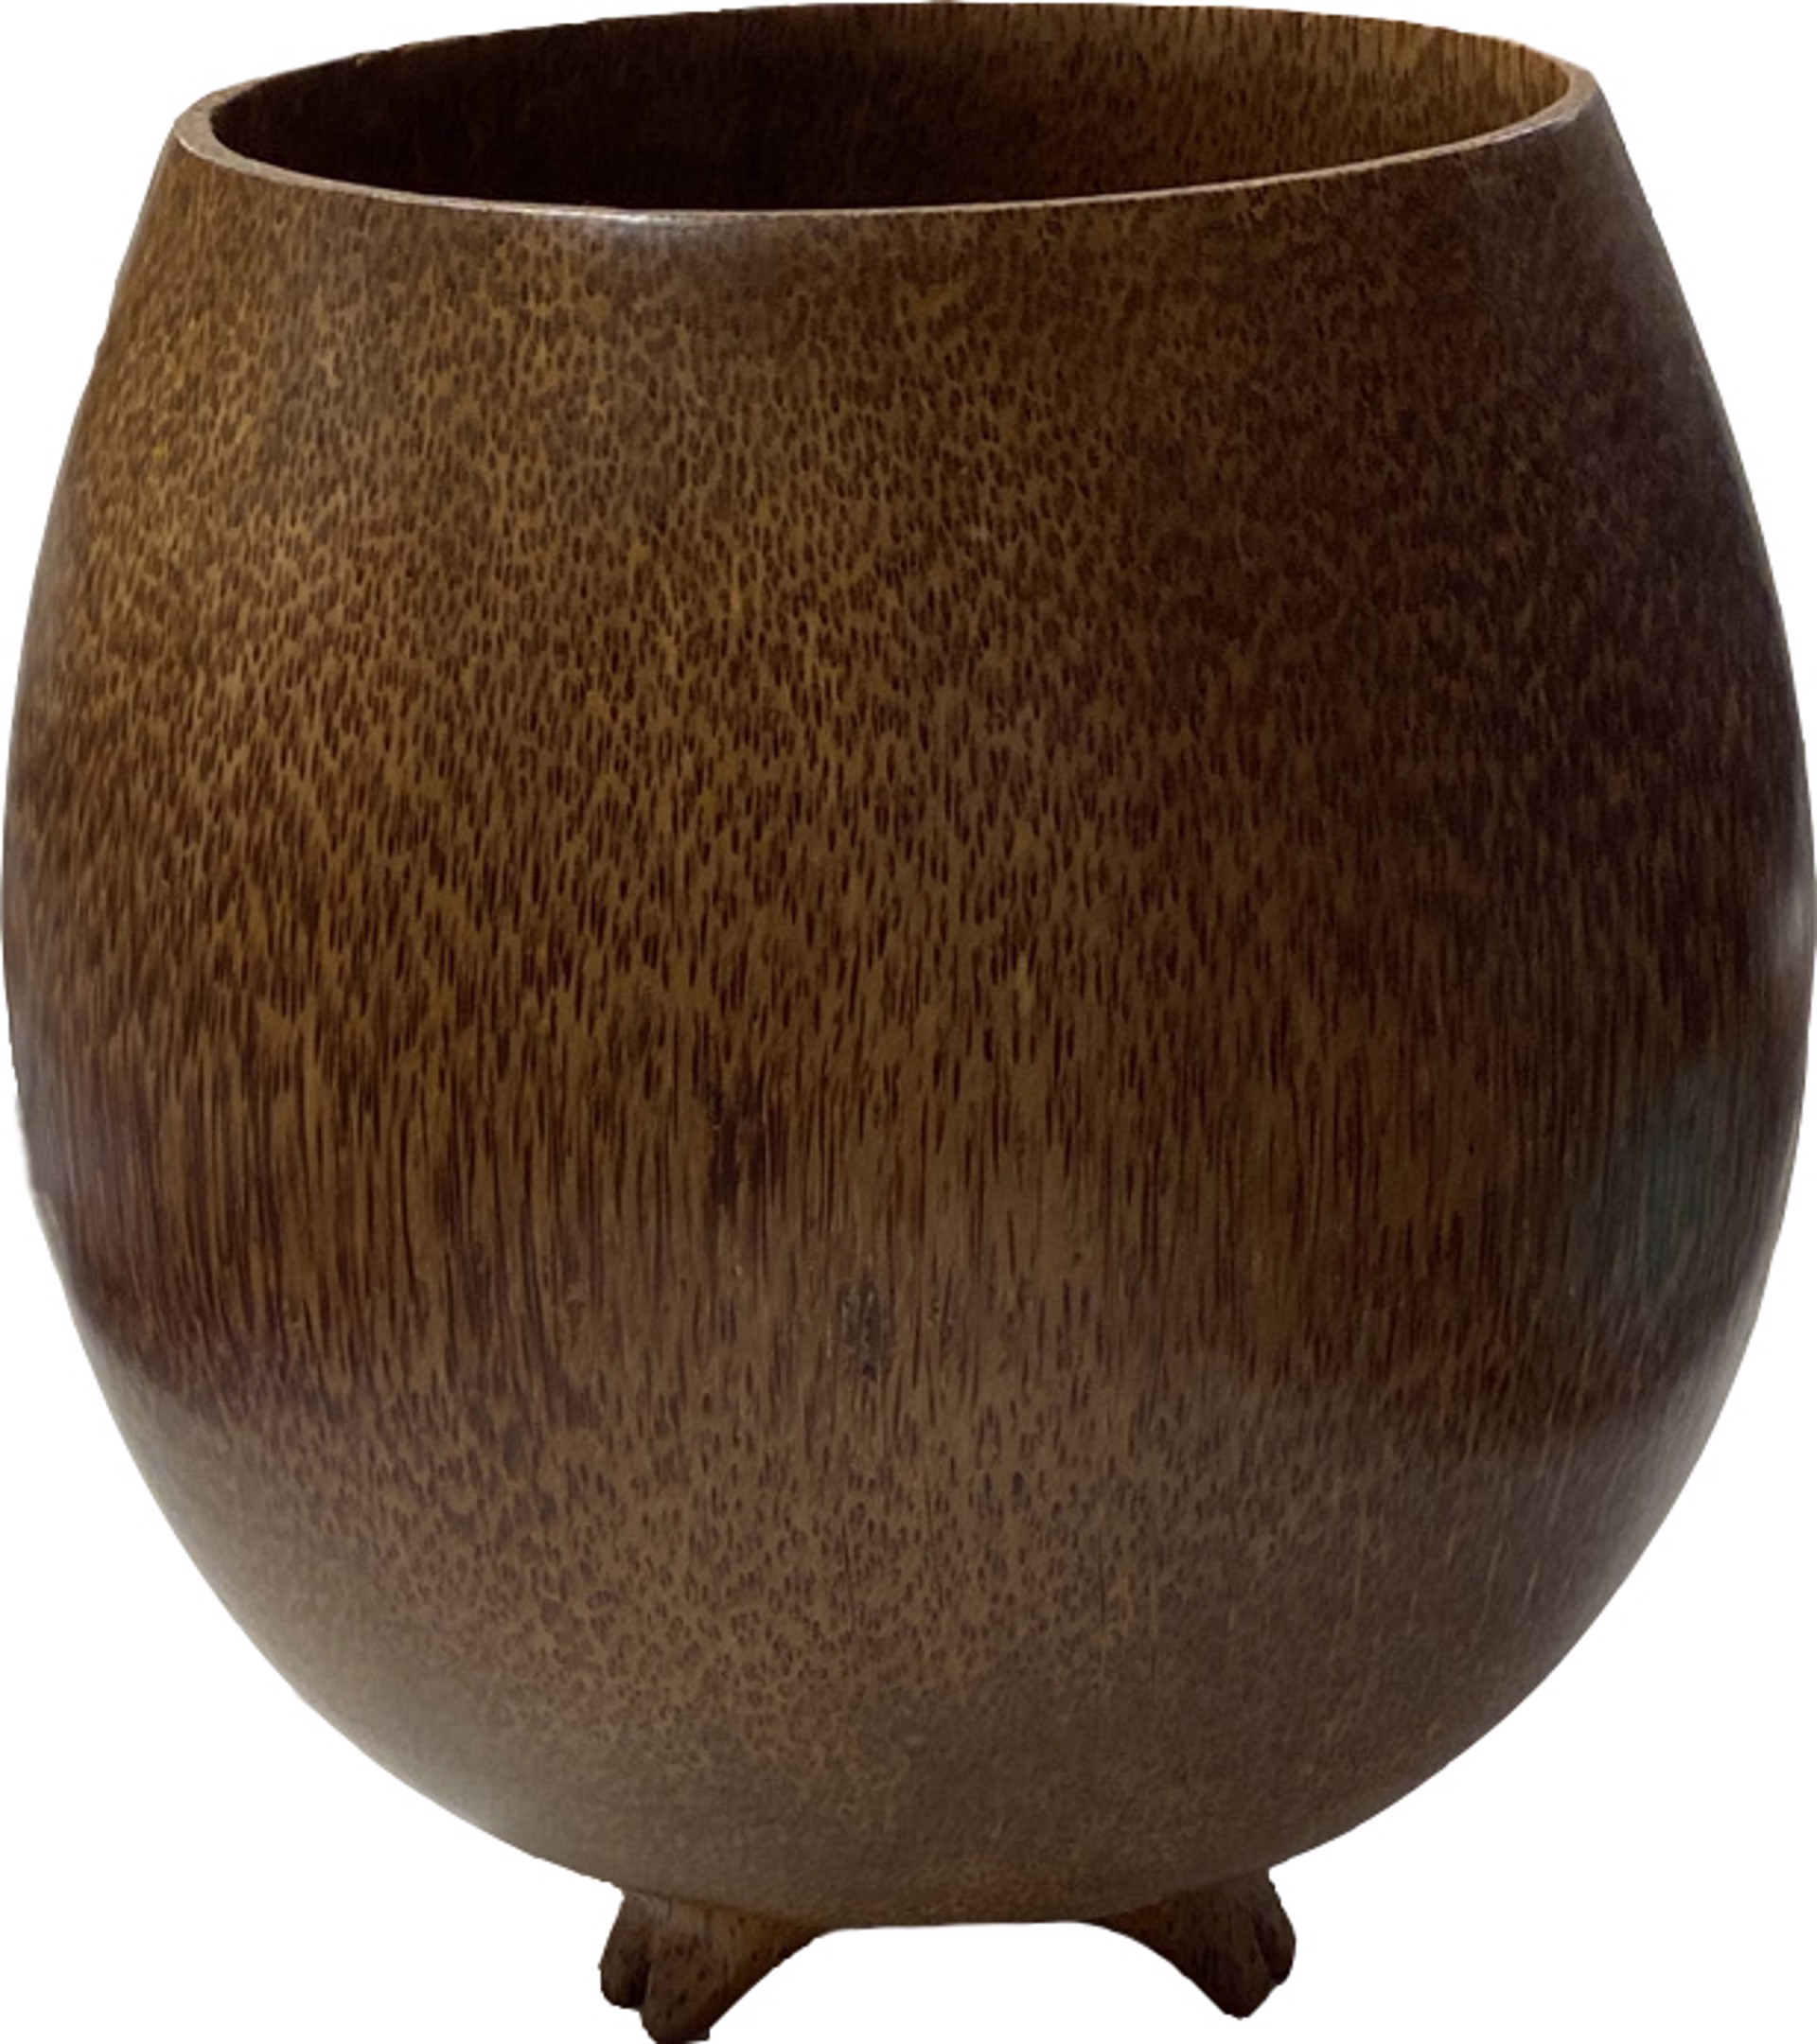 Coconut Deep Bowl with Feet by John Fackrell